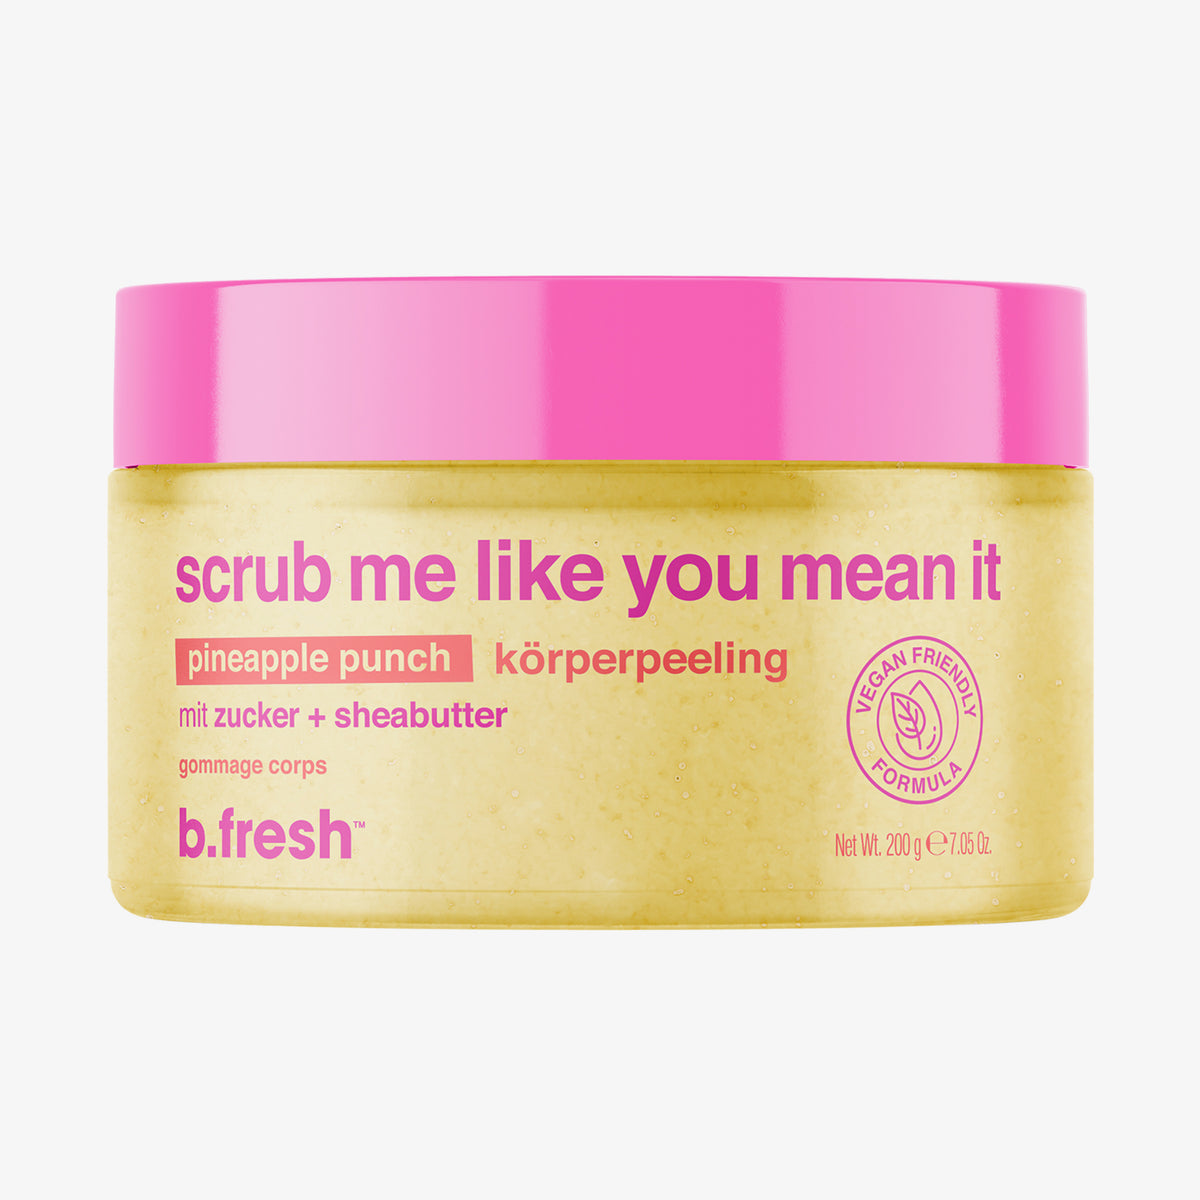 scrub me like you mean it - body scrub